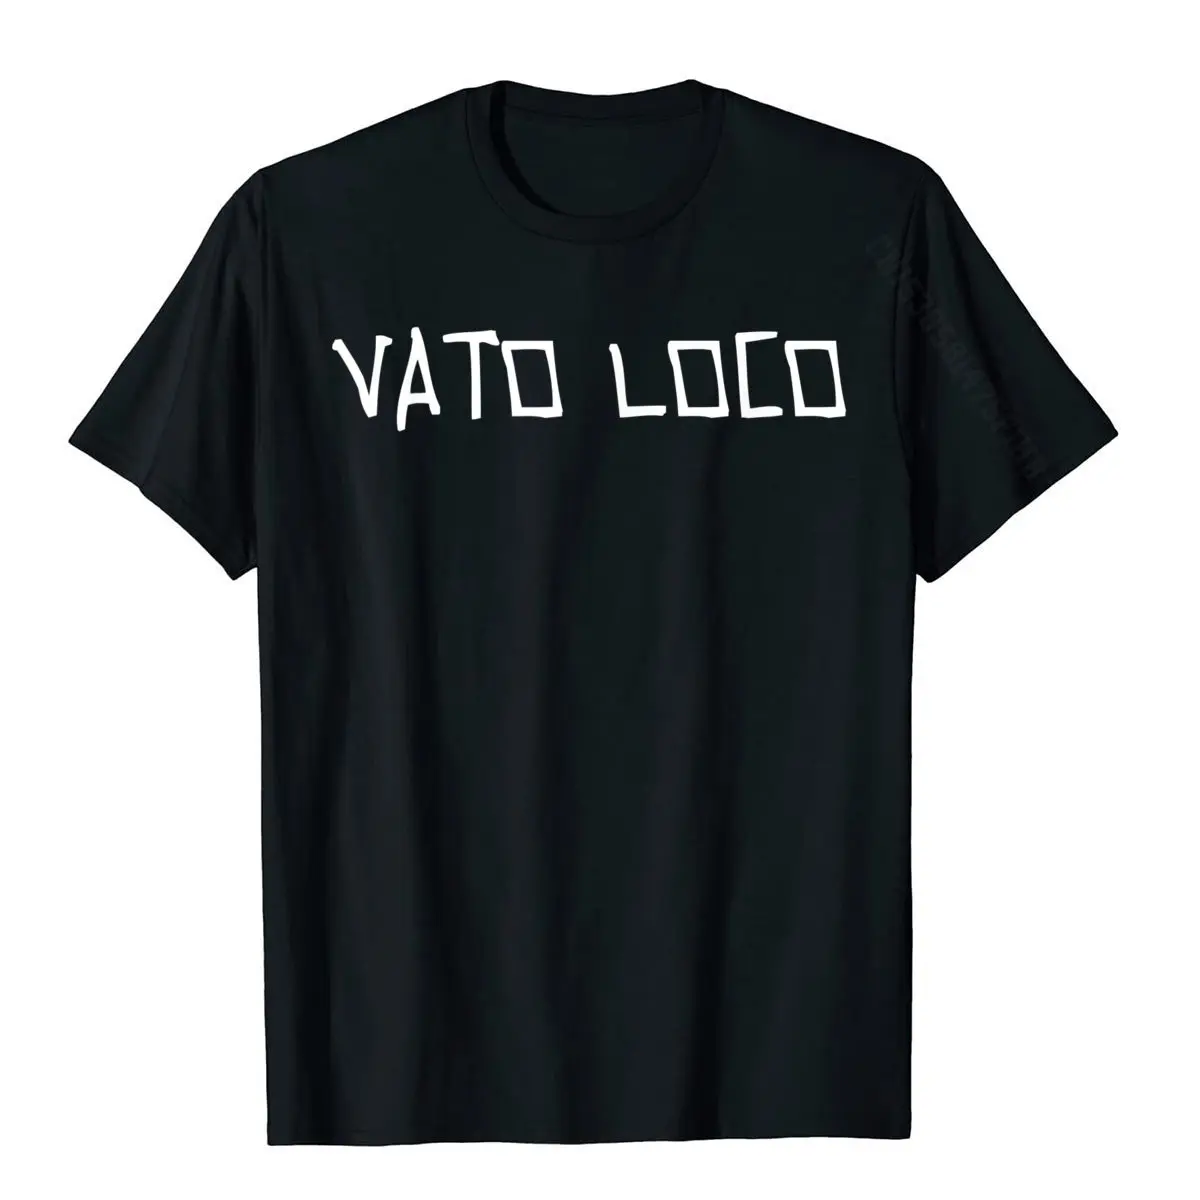 VATO LOCO California Old School Cholo Gangster T-Shirt FunnyDesign Tees Hot Sale Cotton Men Top T-Shirts